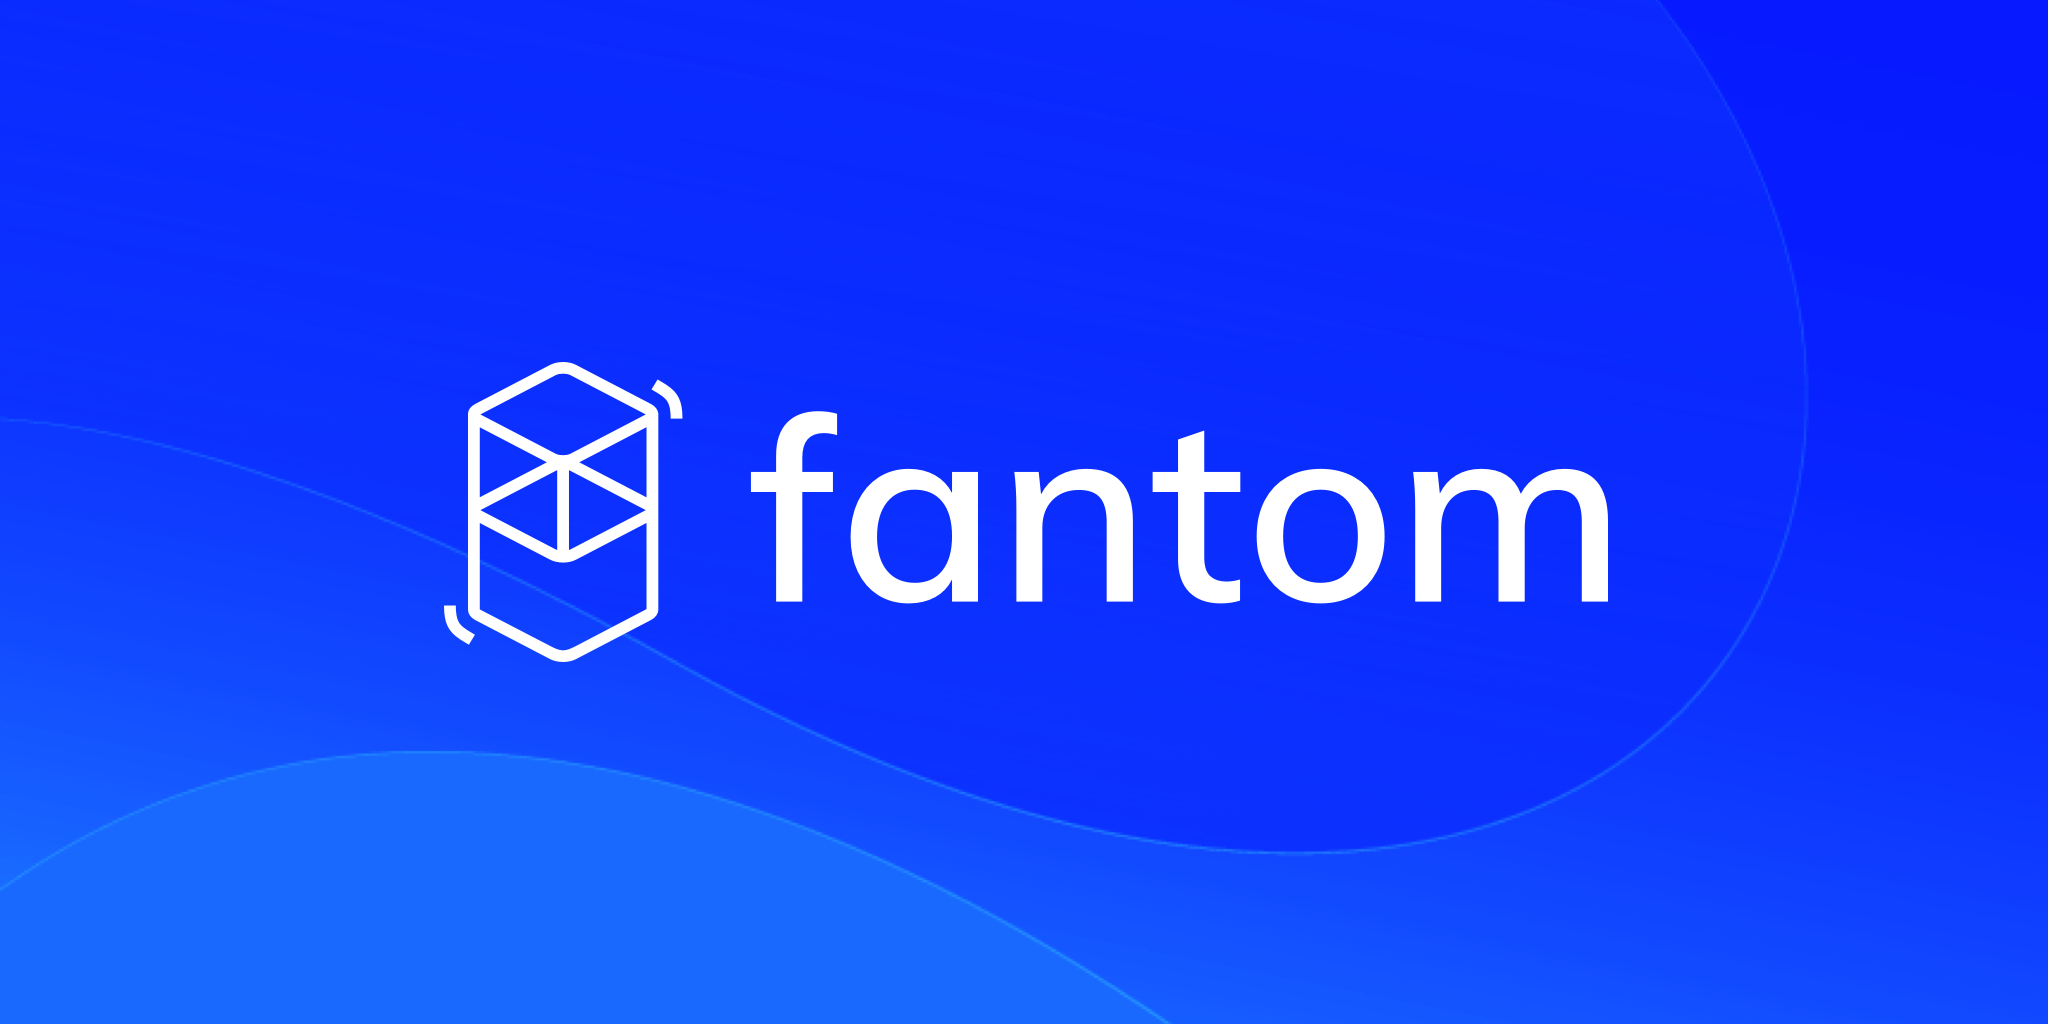 Fantom 1 - بنیاد فانتوم بیانیه شفاف سازی درباره جدایی آندره کرونژ و آنتون نل صادر کرد